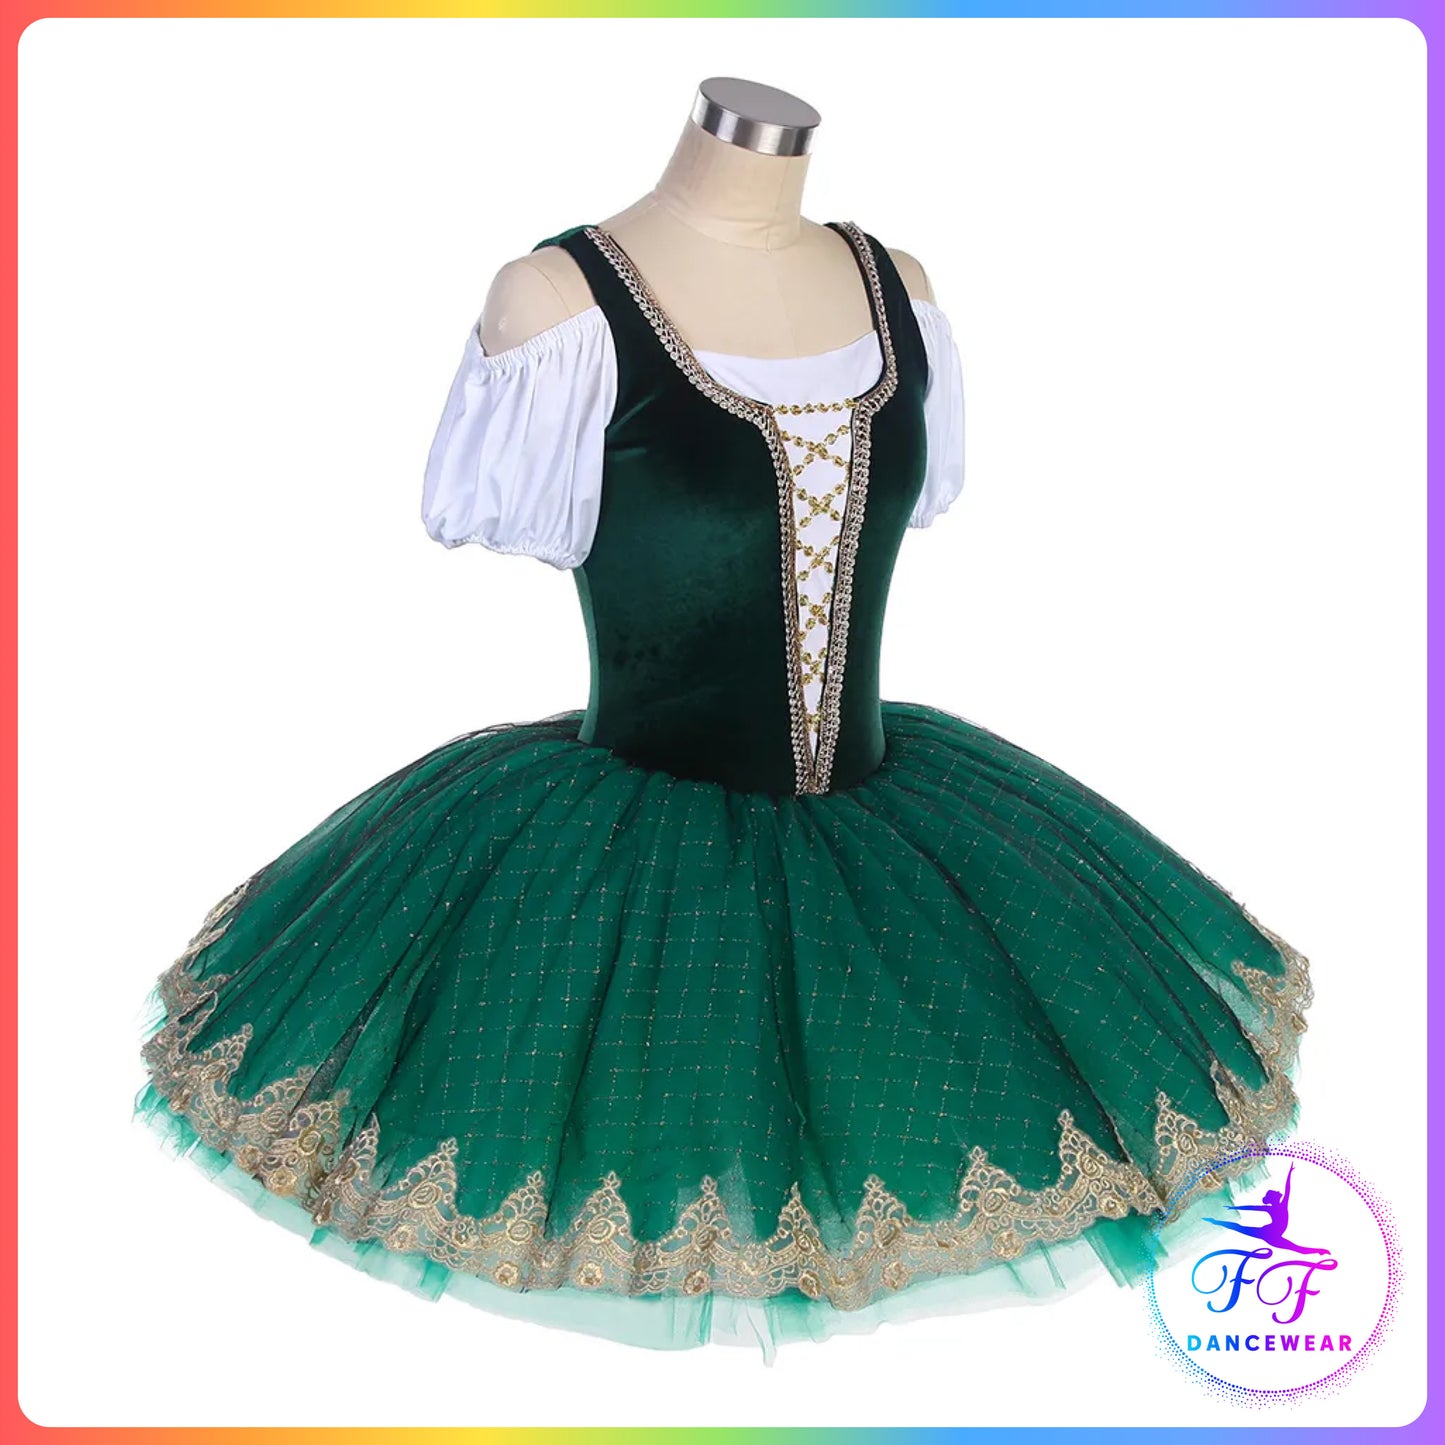 Green Velvet Cold Shoulder Style Bell Ballet Tutu (Child & Adult Sizes)